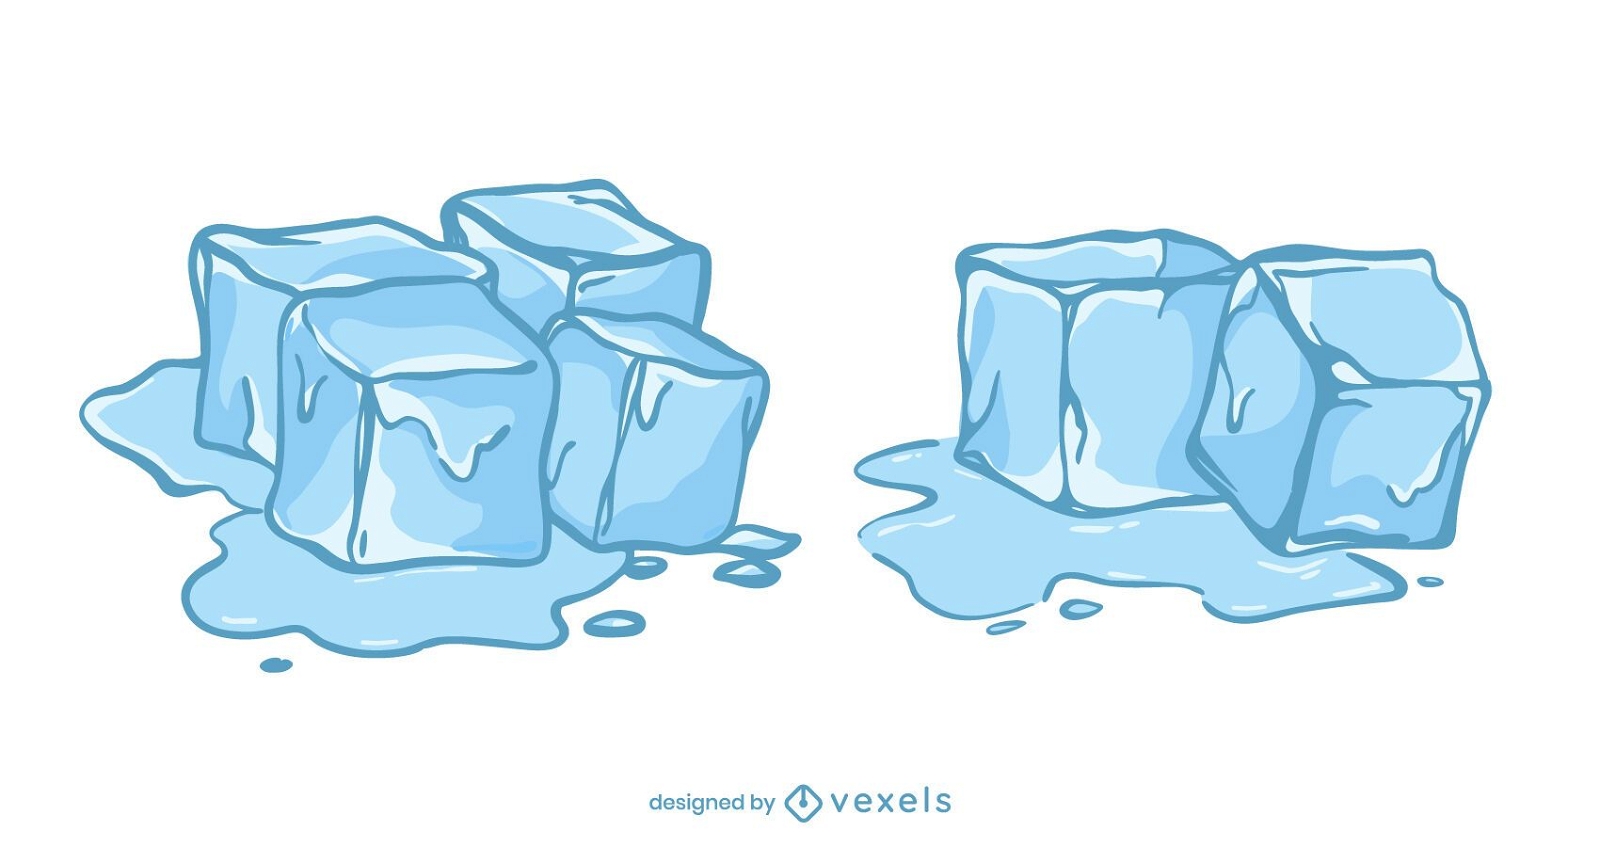 Ice cubes illustration set